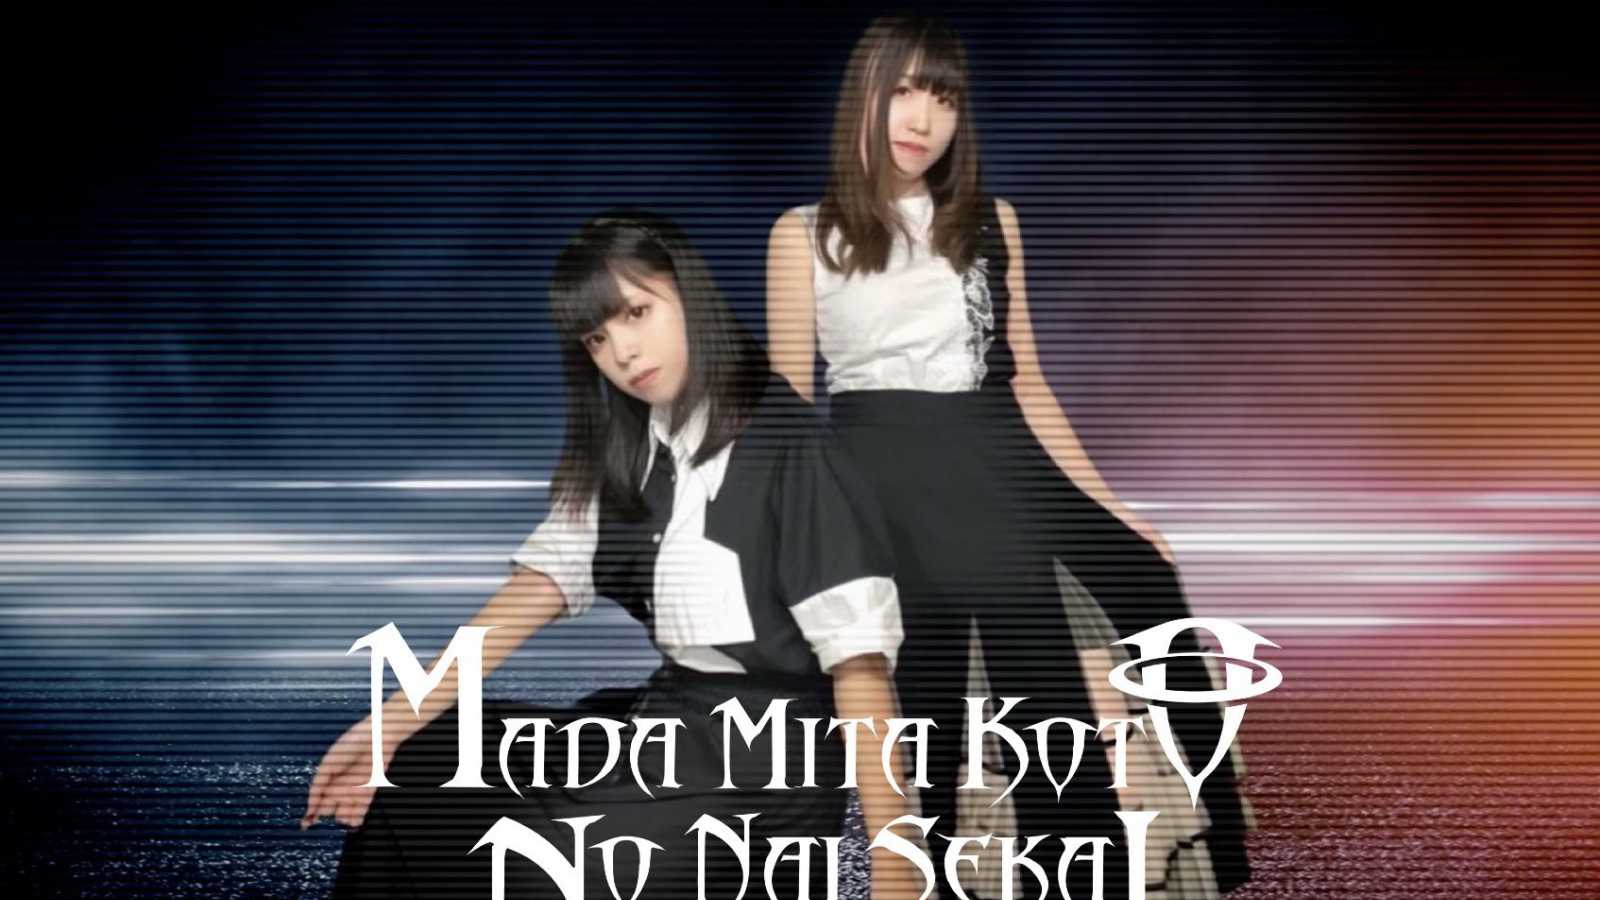 New Releases from Mada mitakoto no nai sekai © FABTONE Inc. All rights reserved.